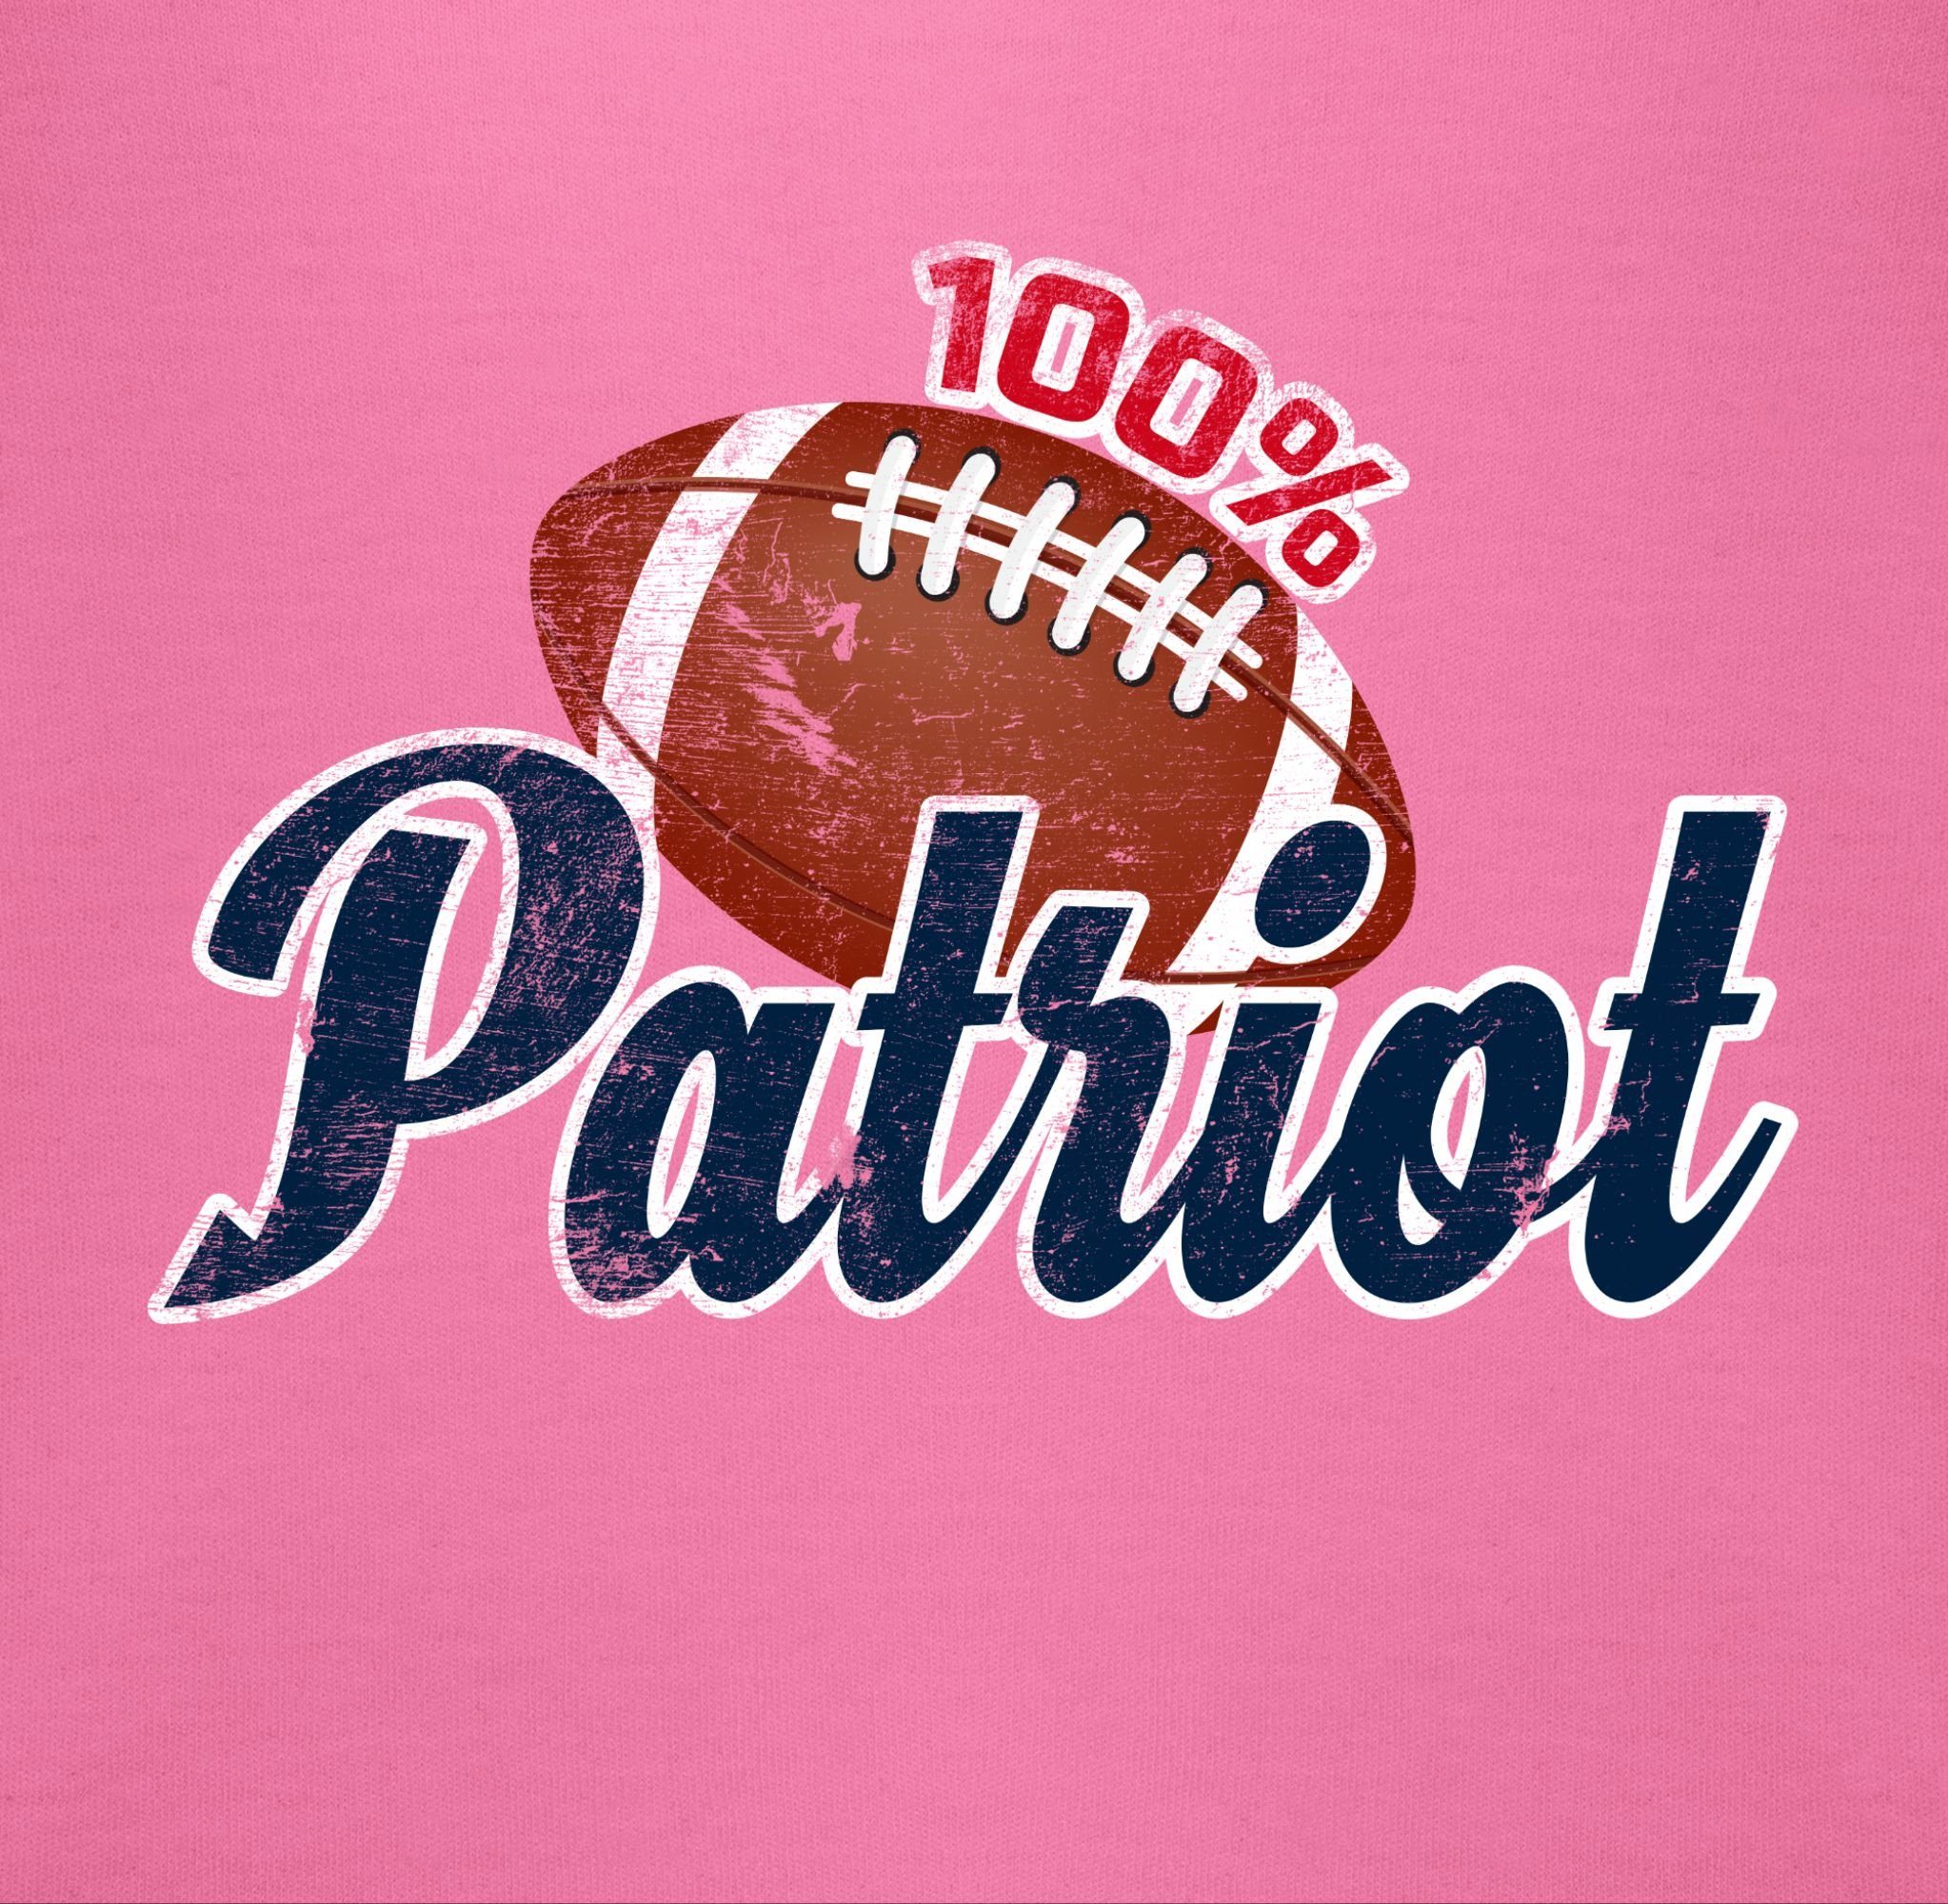 Patriot, Lätzchen Pink 2 Bewegung & Shirtracer Baby Sport 100%